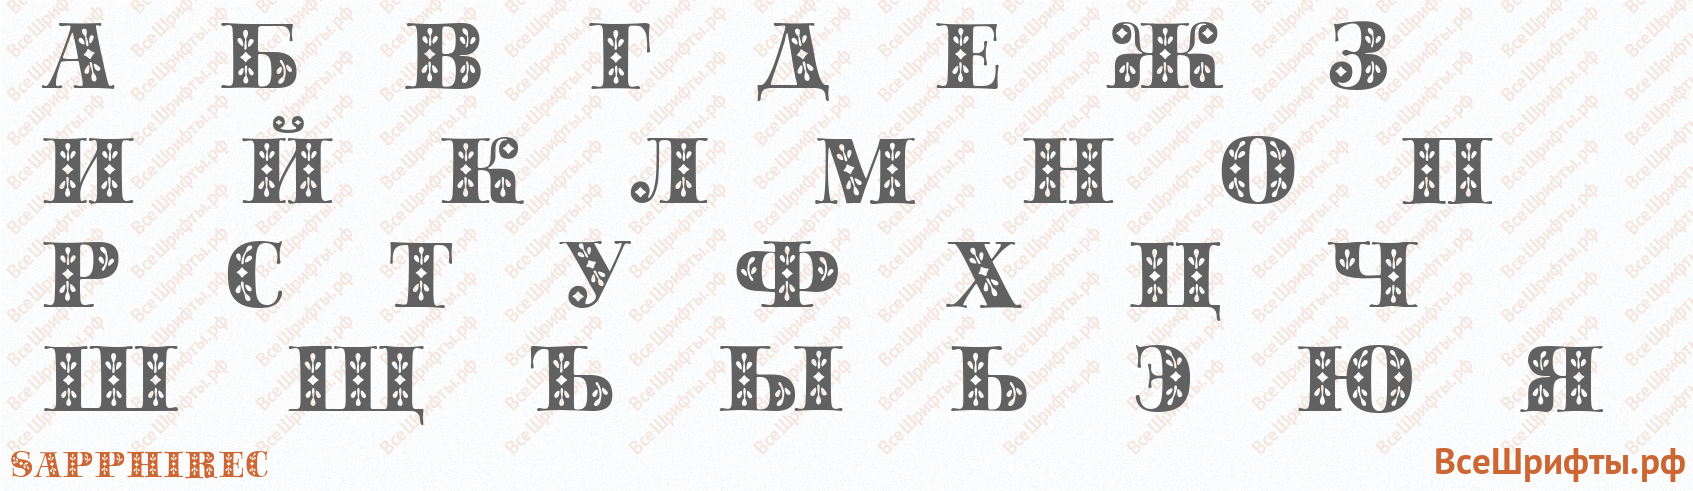 Шрифт SapphireС с русскими буквами